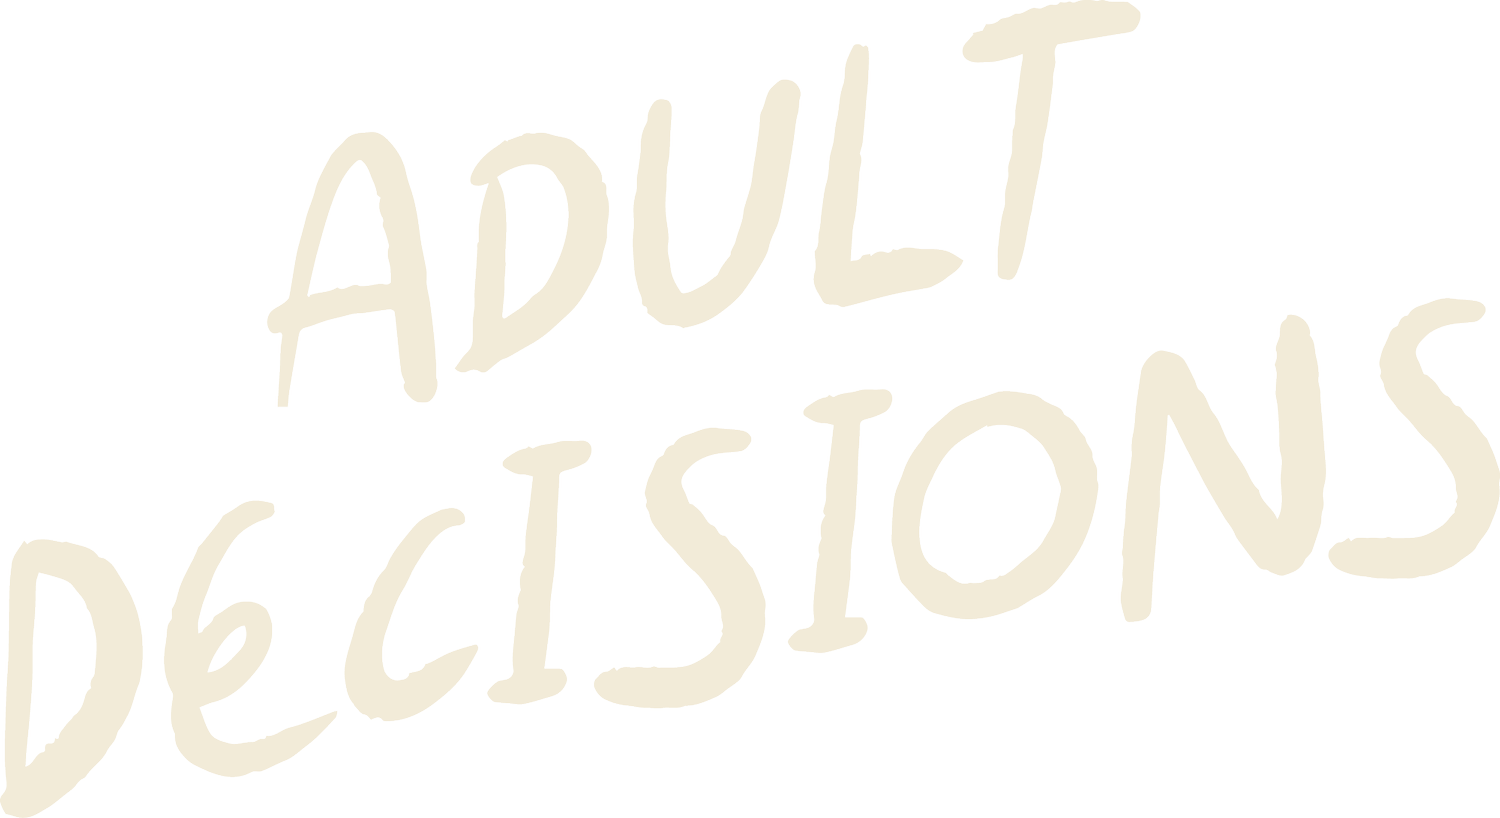 Adult Decisions